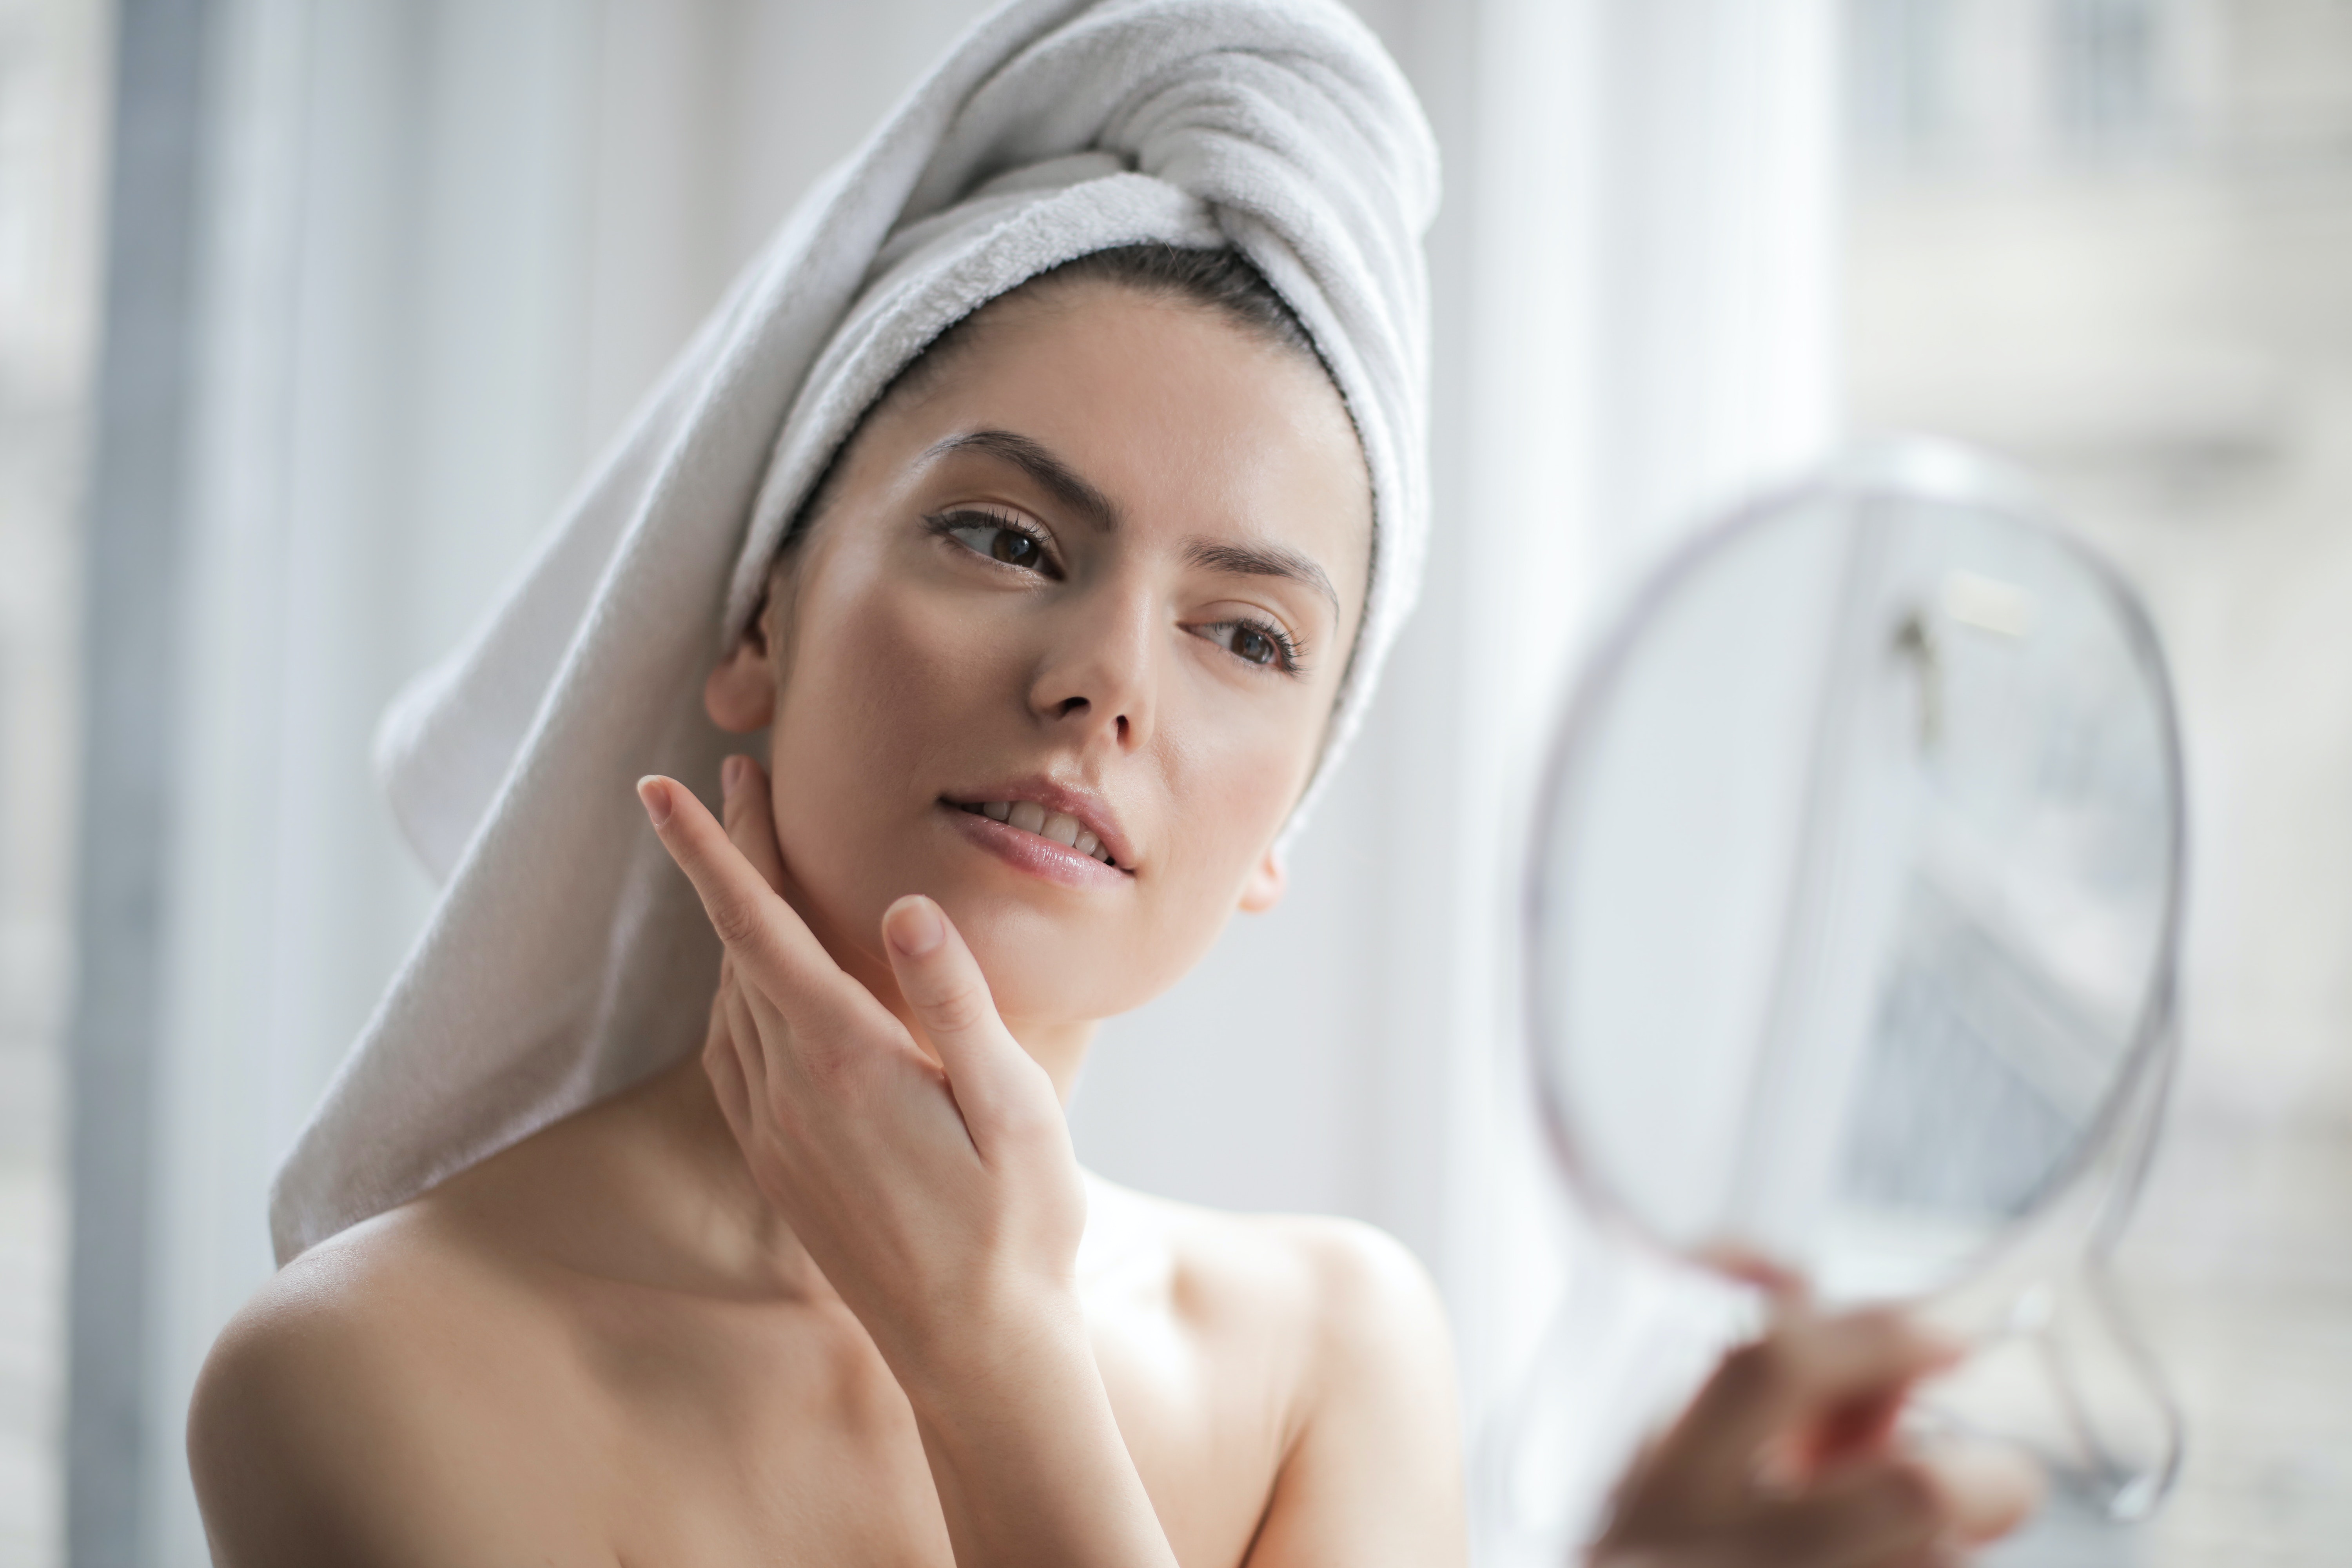 Skincare myths